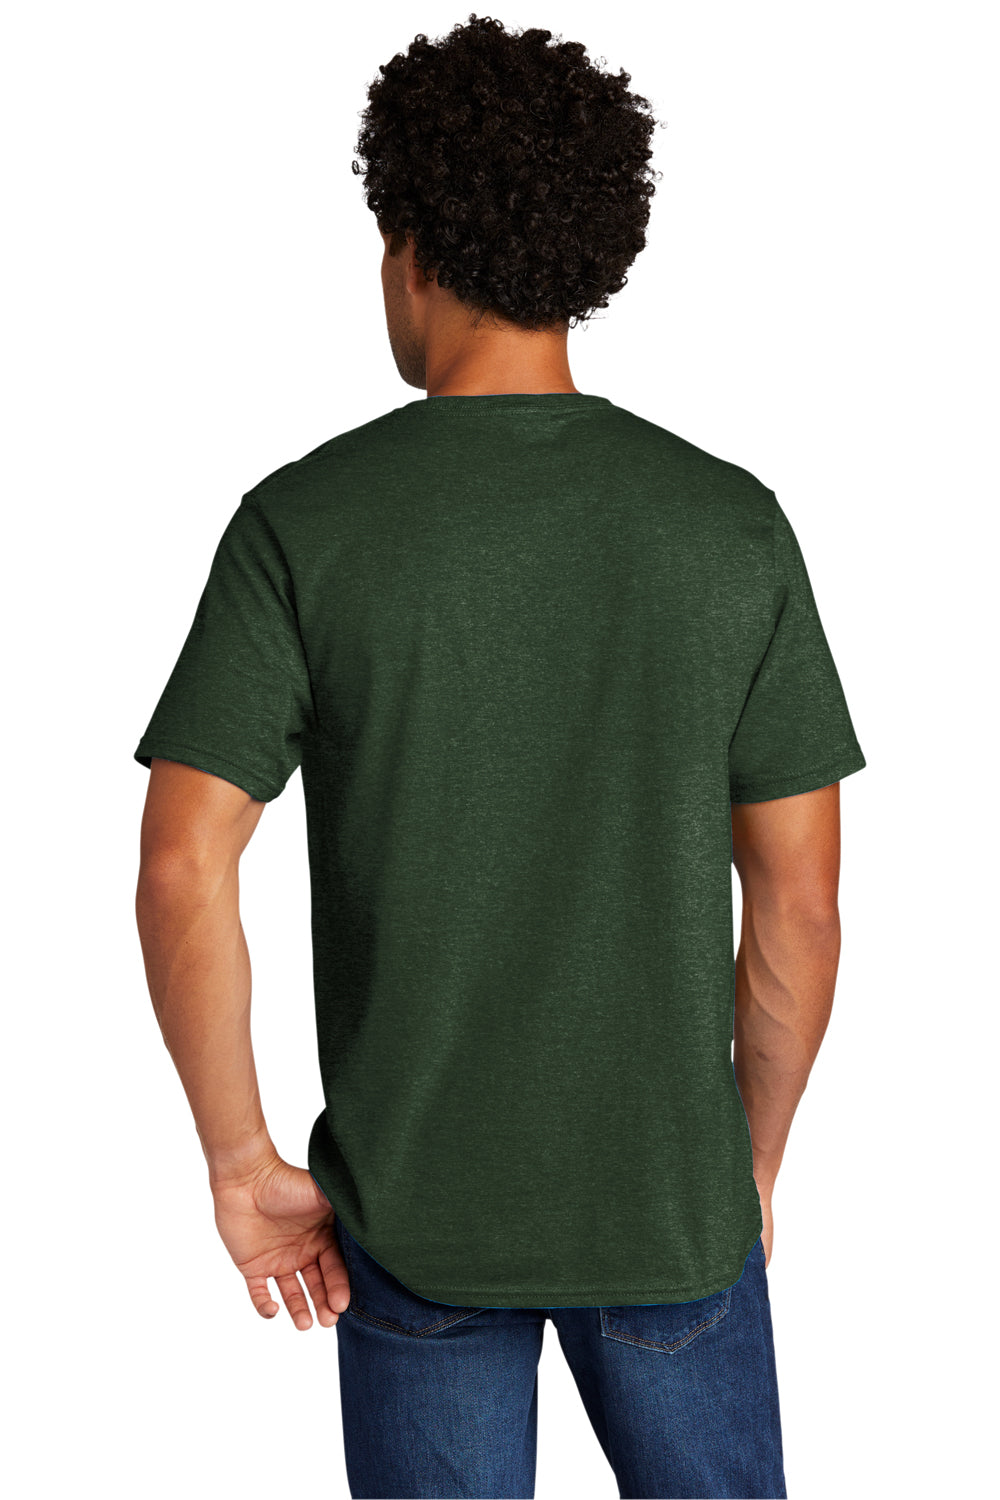 Port & Company Mens Short Sleeve Crewneck T-Shirt Heather Forest Green Side